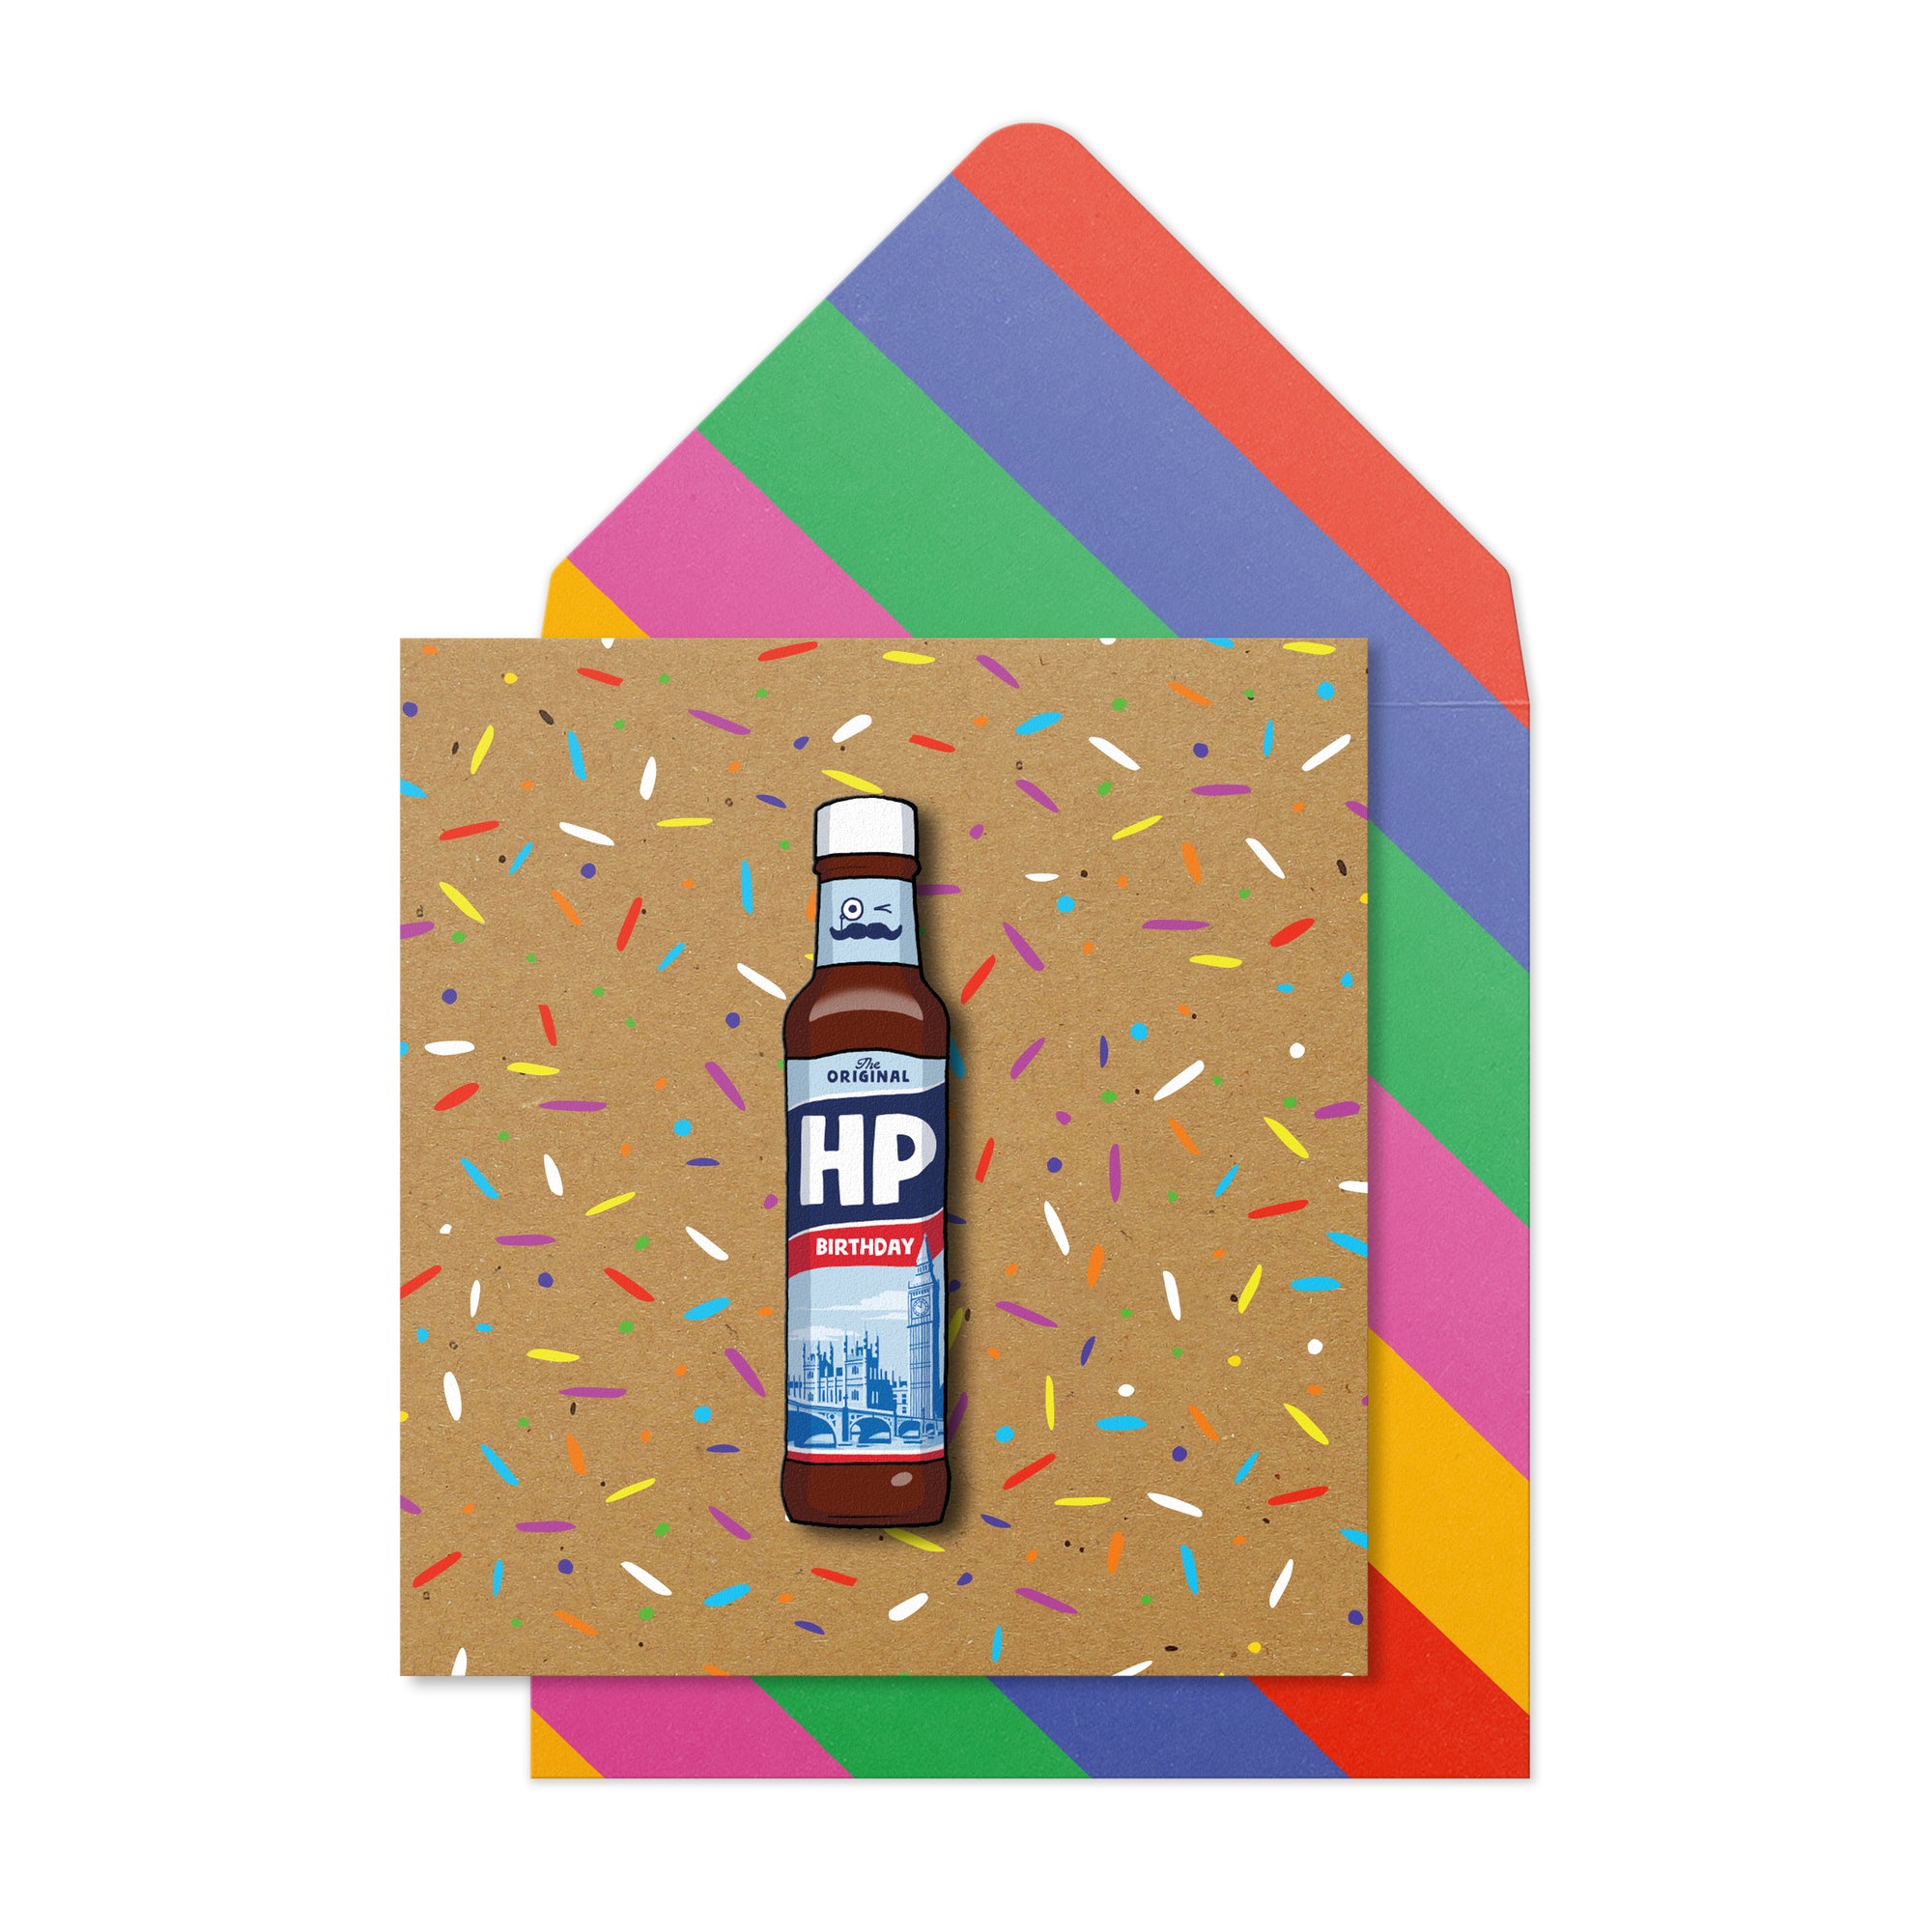 HP Sauce (Birthday) Confetti